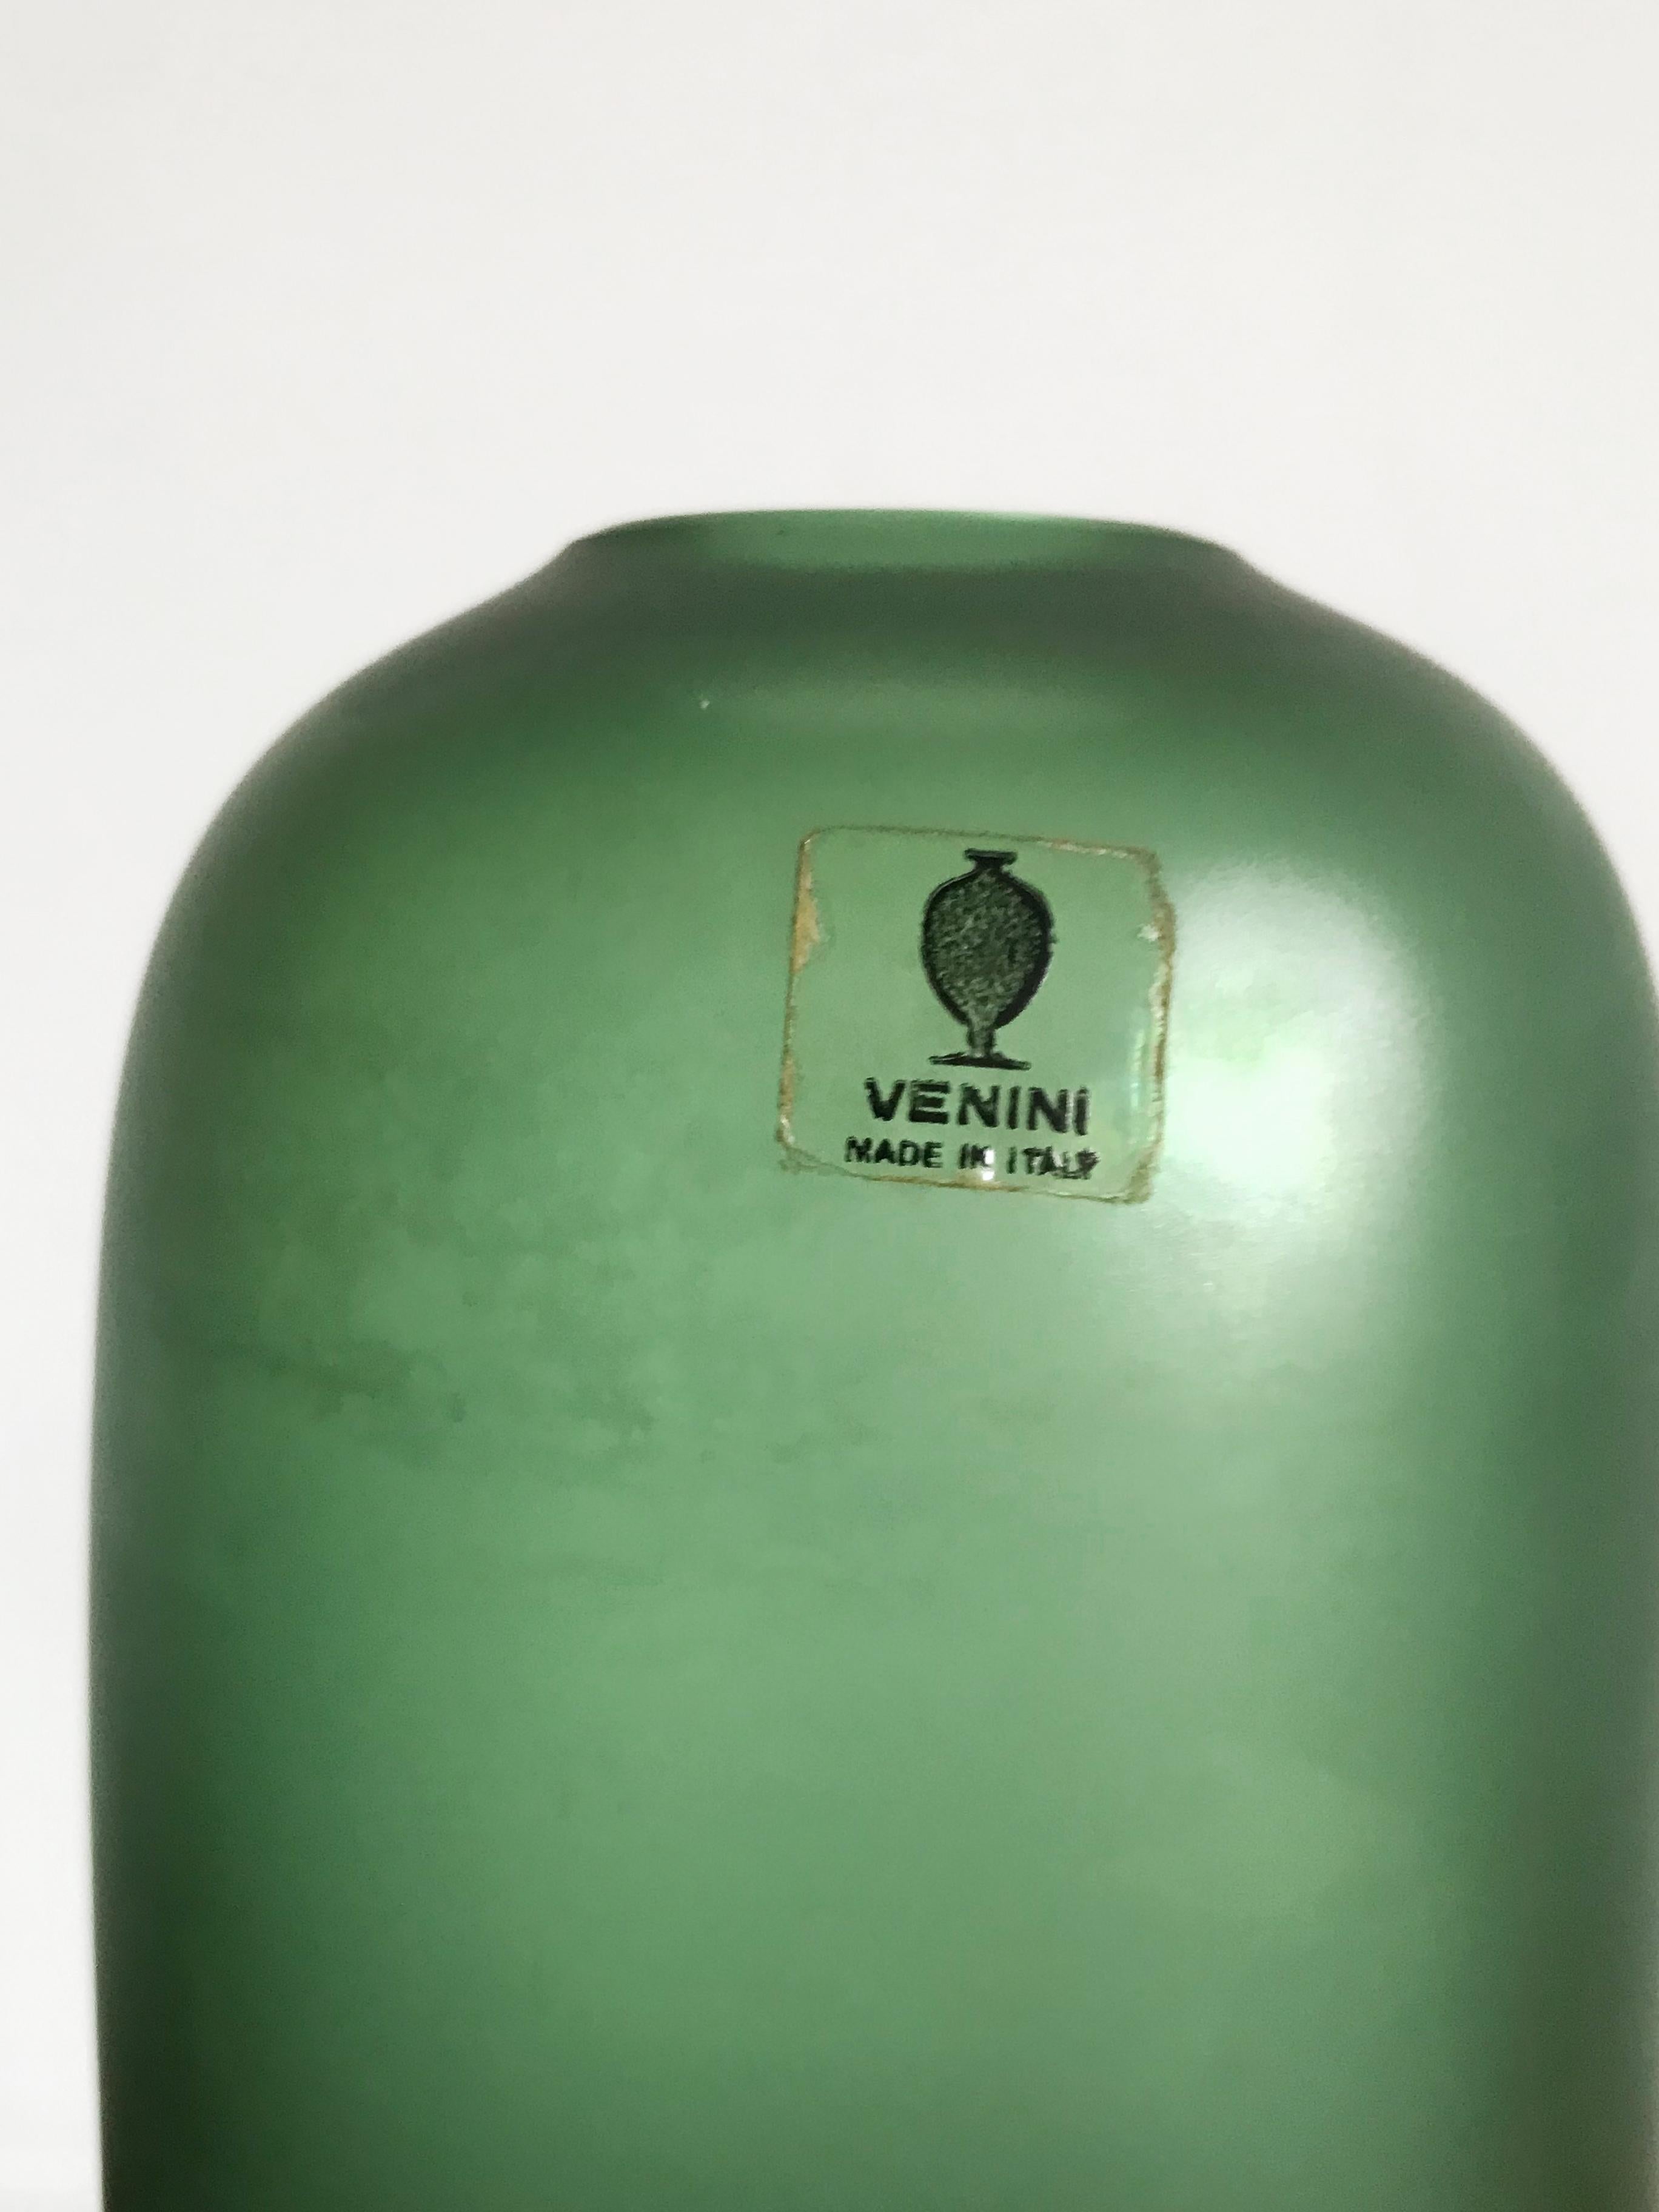 Venini Murano Italien Grüne Glasflasche Serie Velati, 1981 (Ende des 20. Jahrhunderts) im Angebot